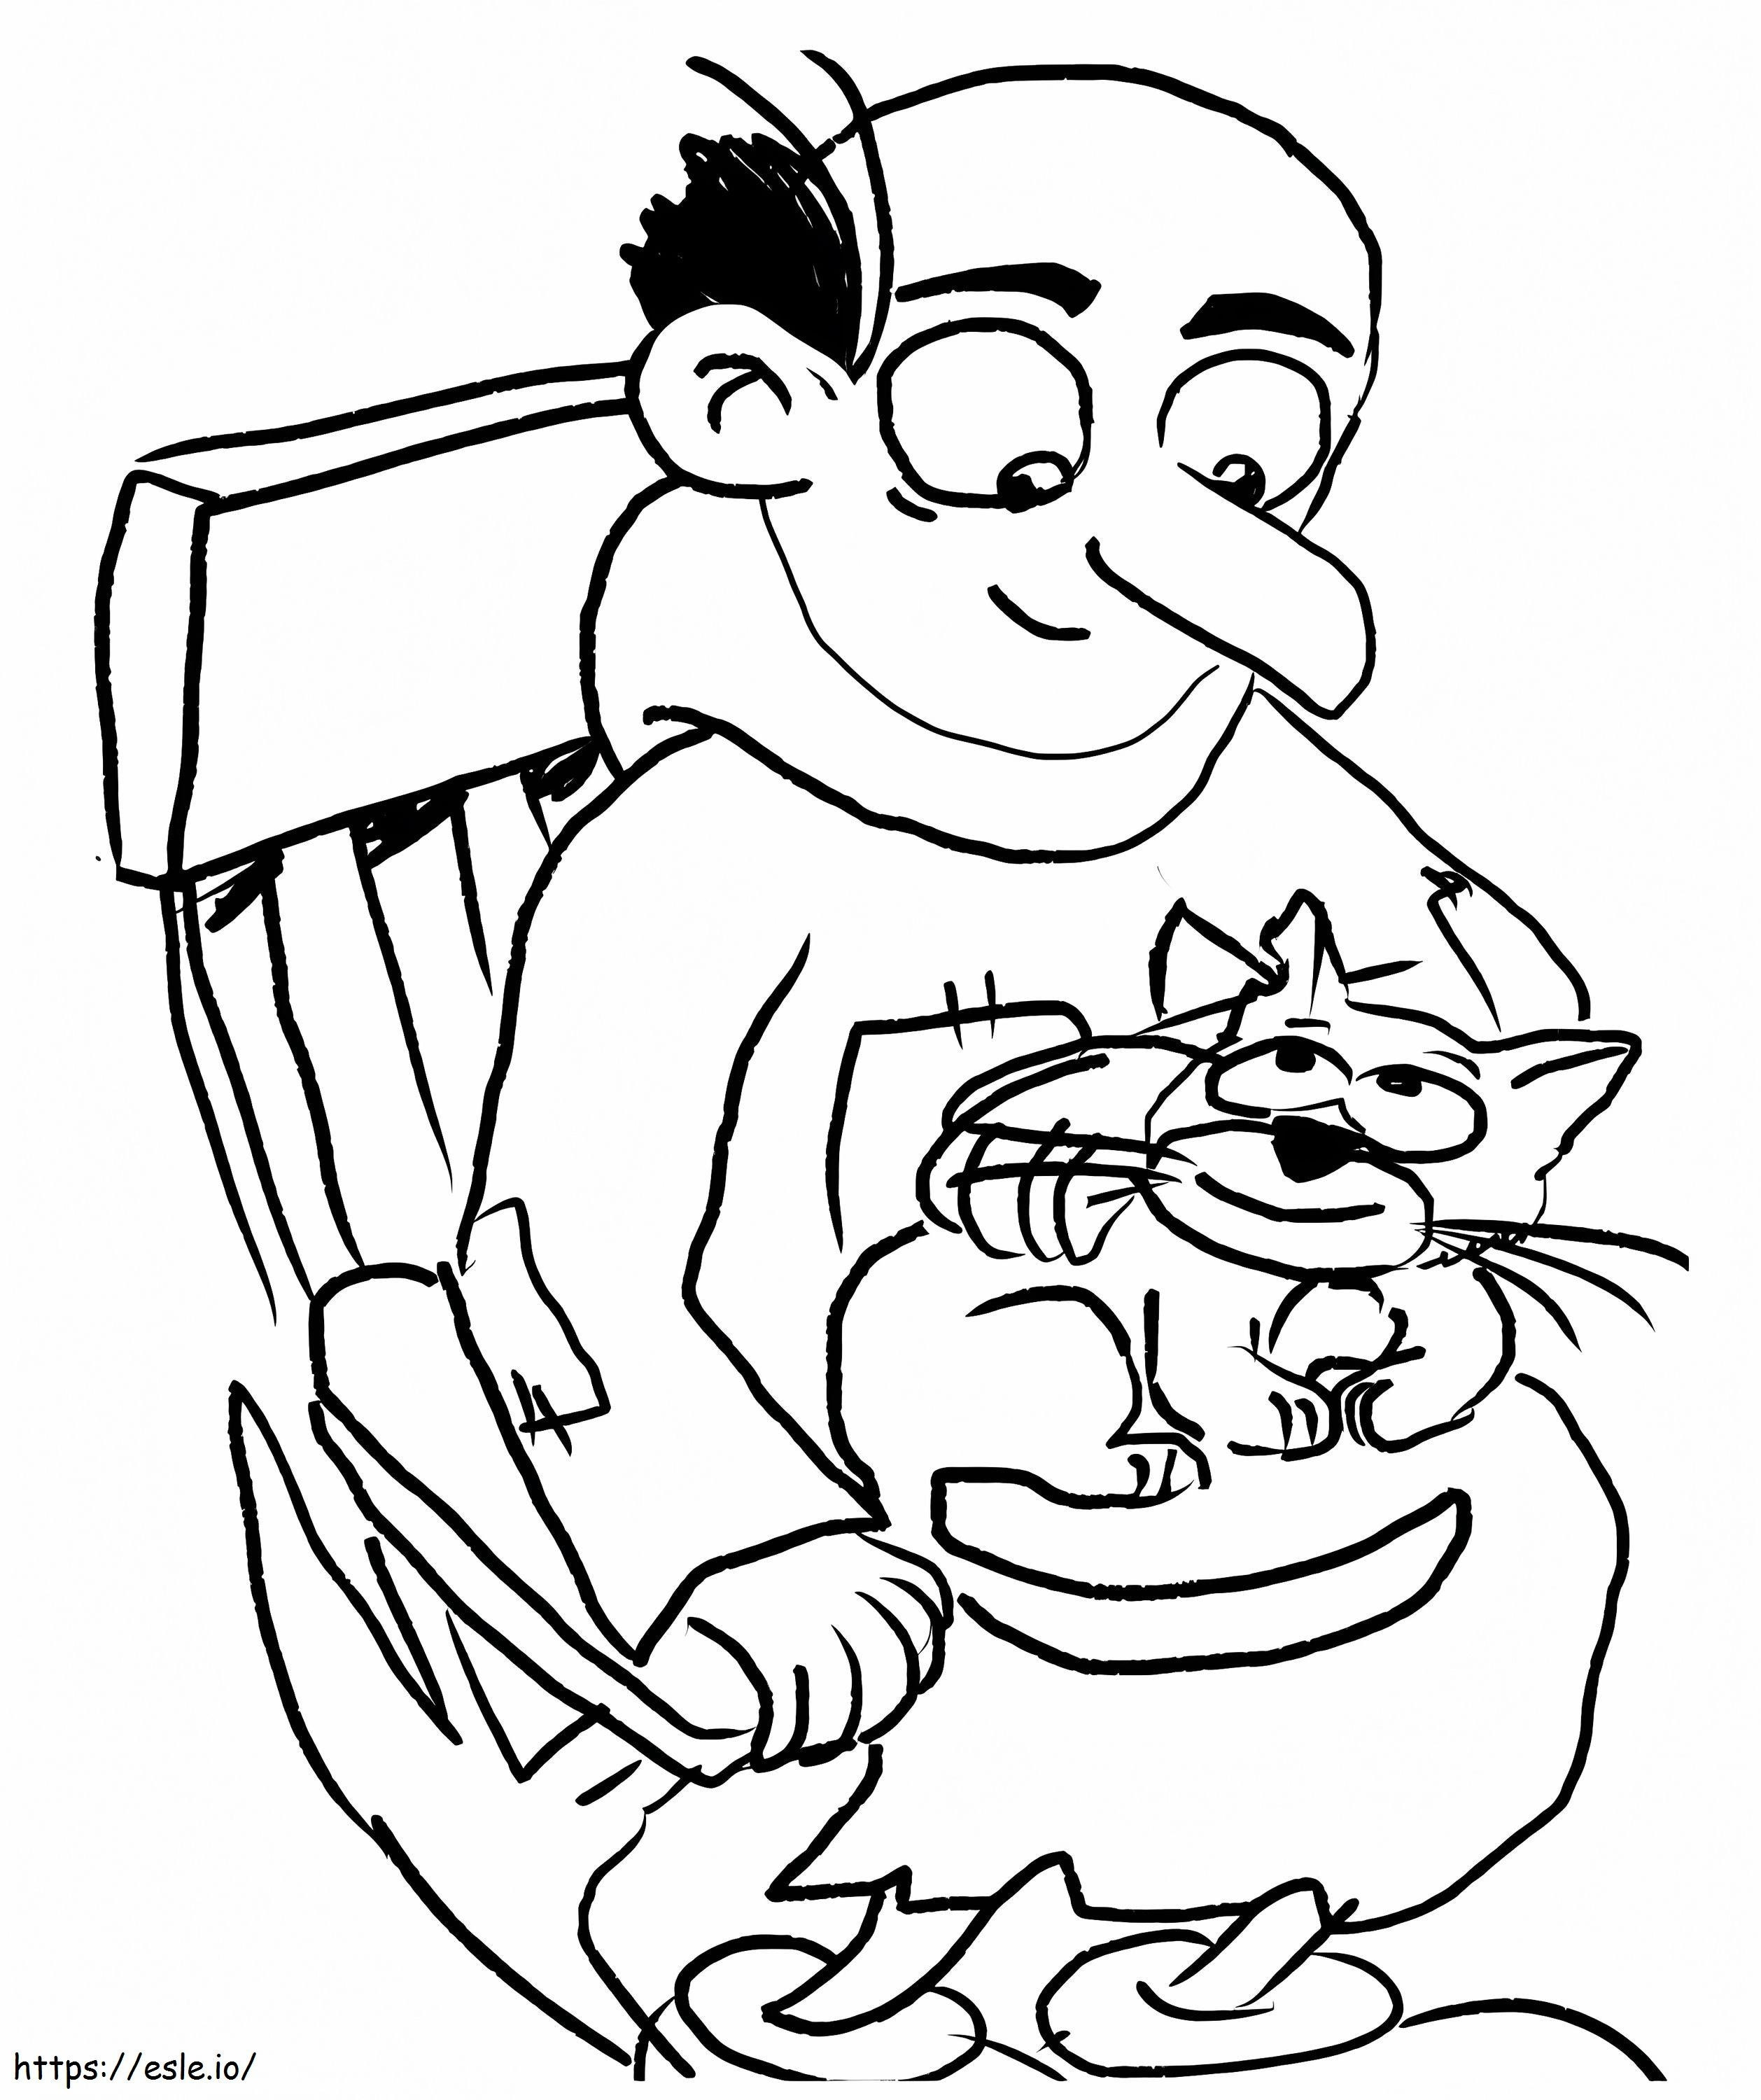 Gargamel ze swoim kotem kolorowanka